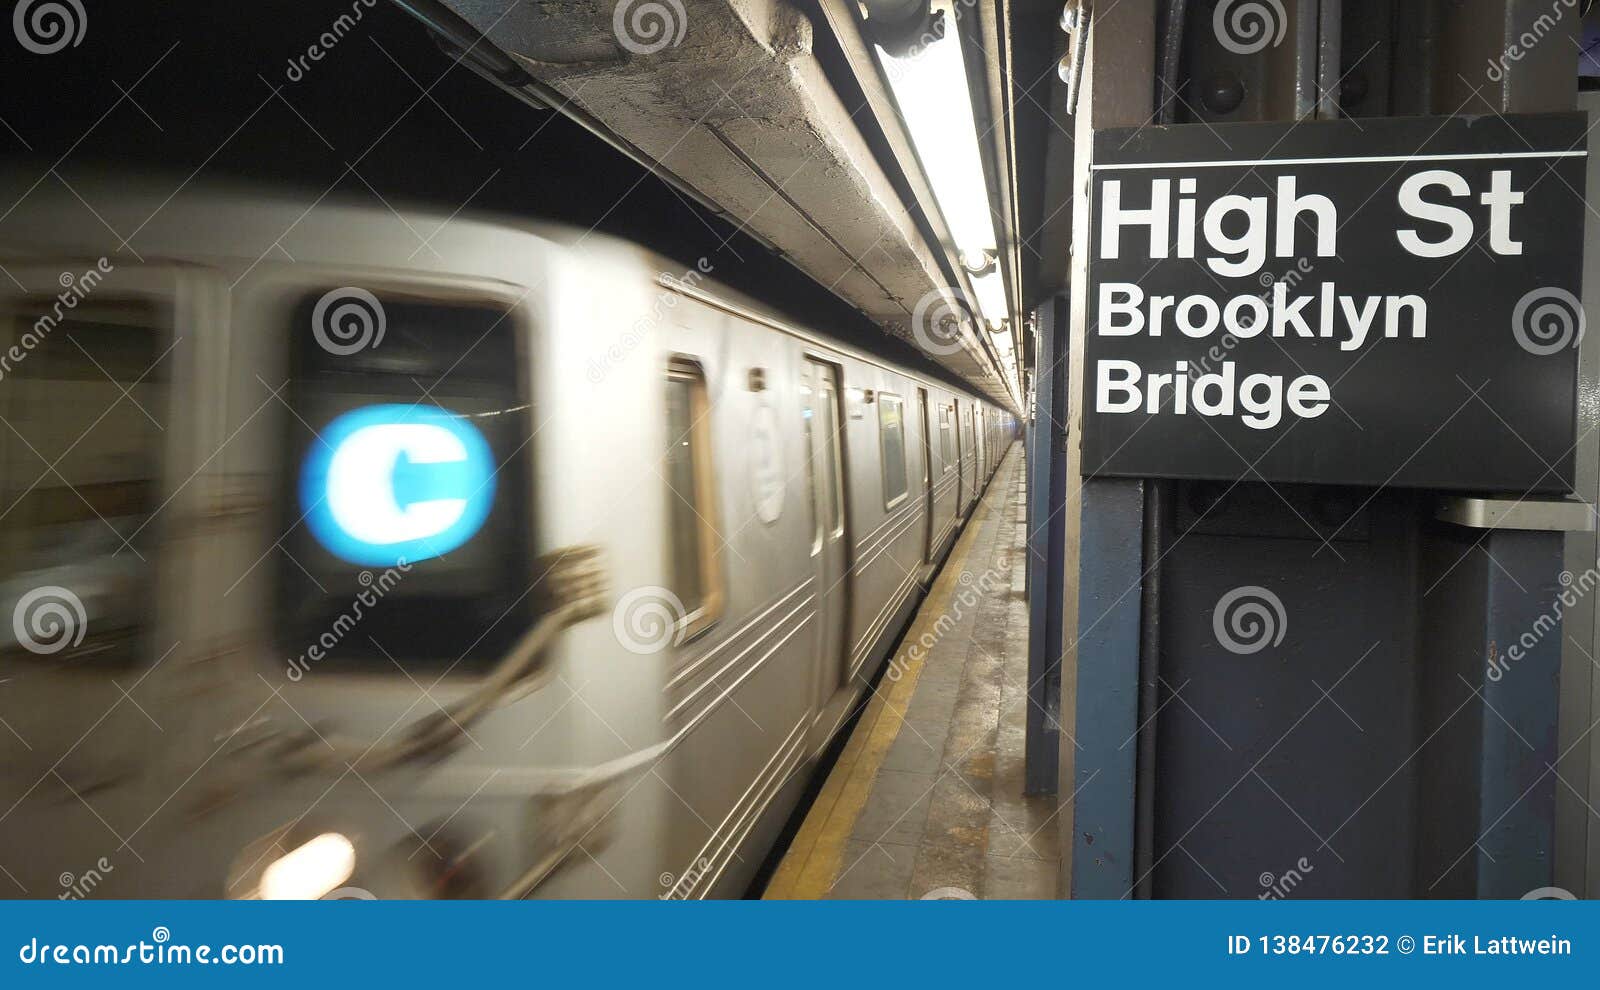 668 Brooklyn Bridge Subway Photos Free Royalty Free Stock Photos From Dreamstime